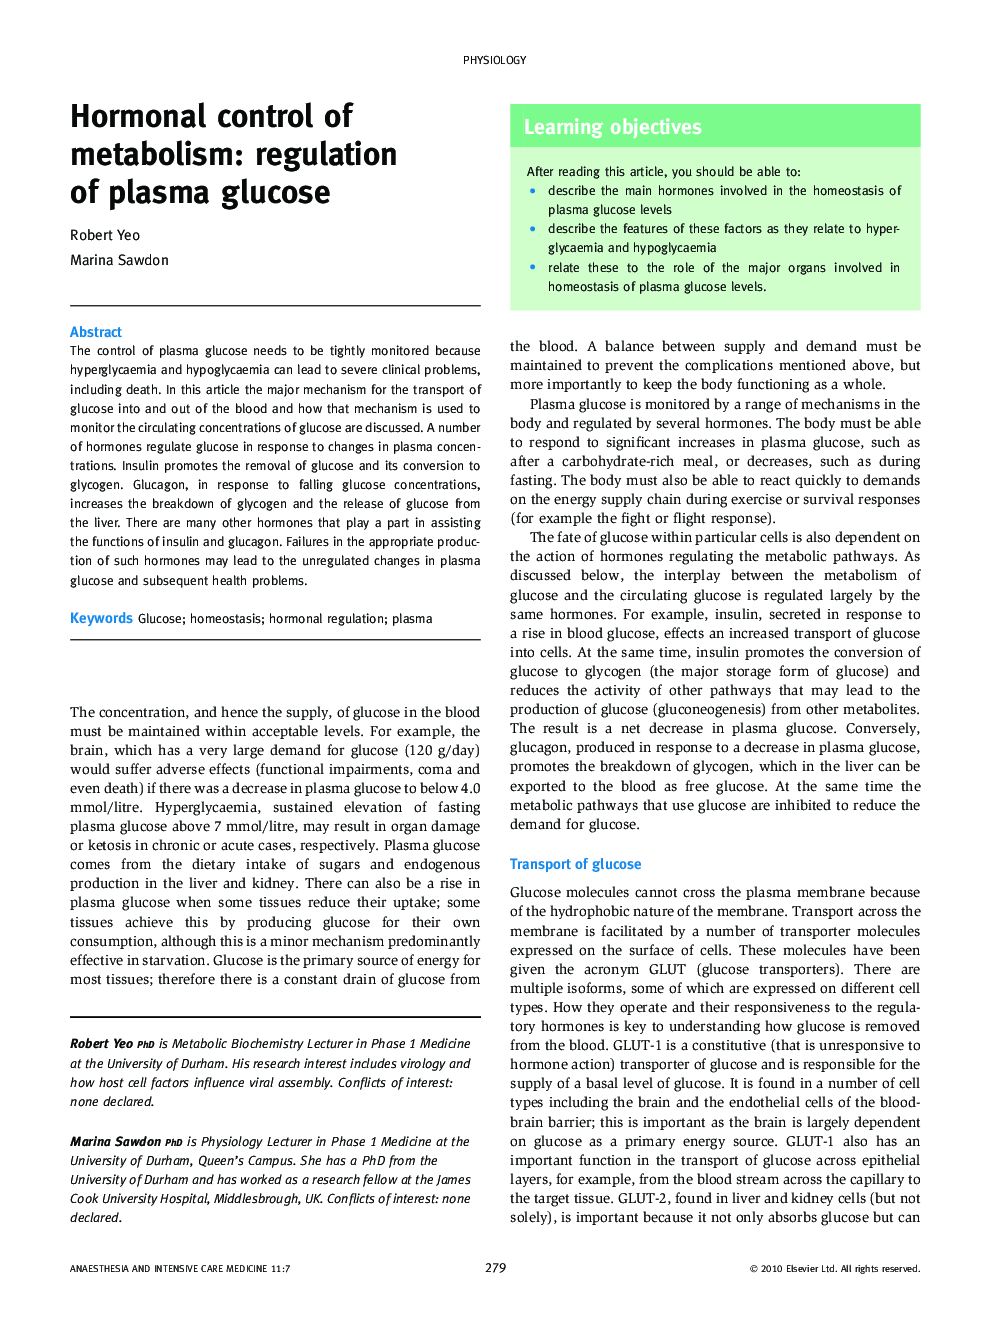 Hormonal control of metabolism: regulation of plasma glucose